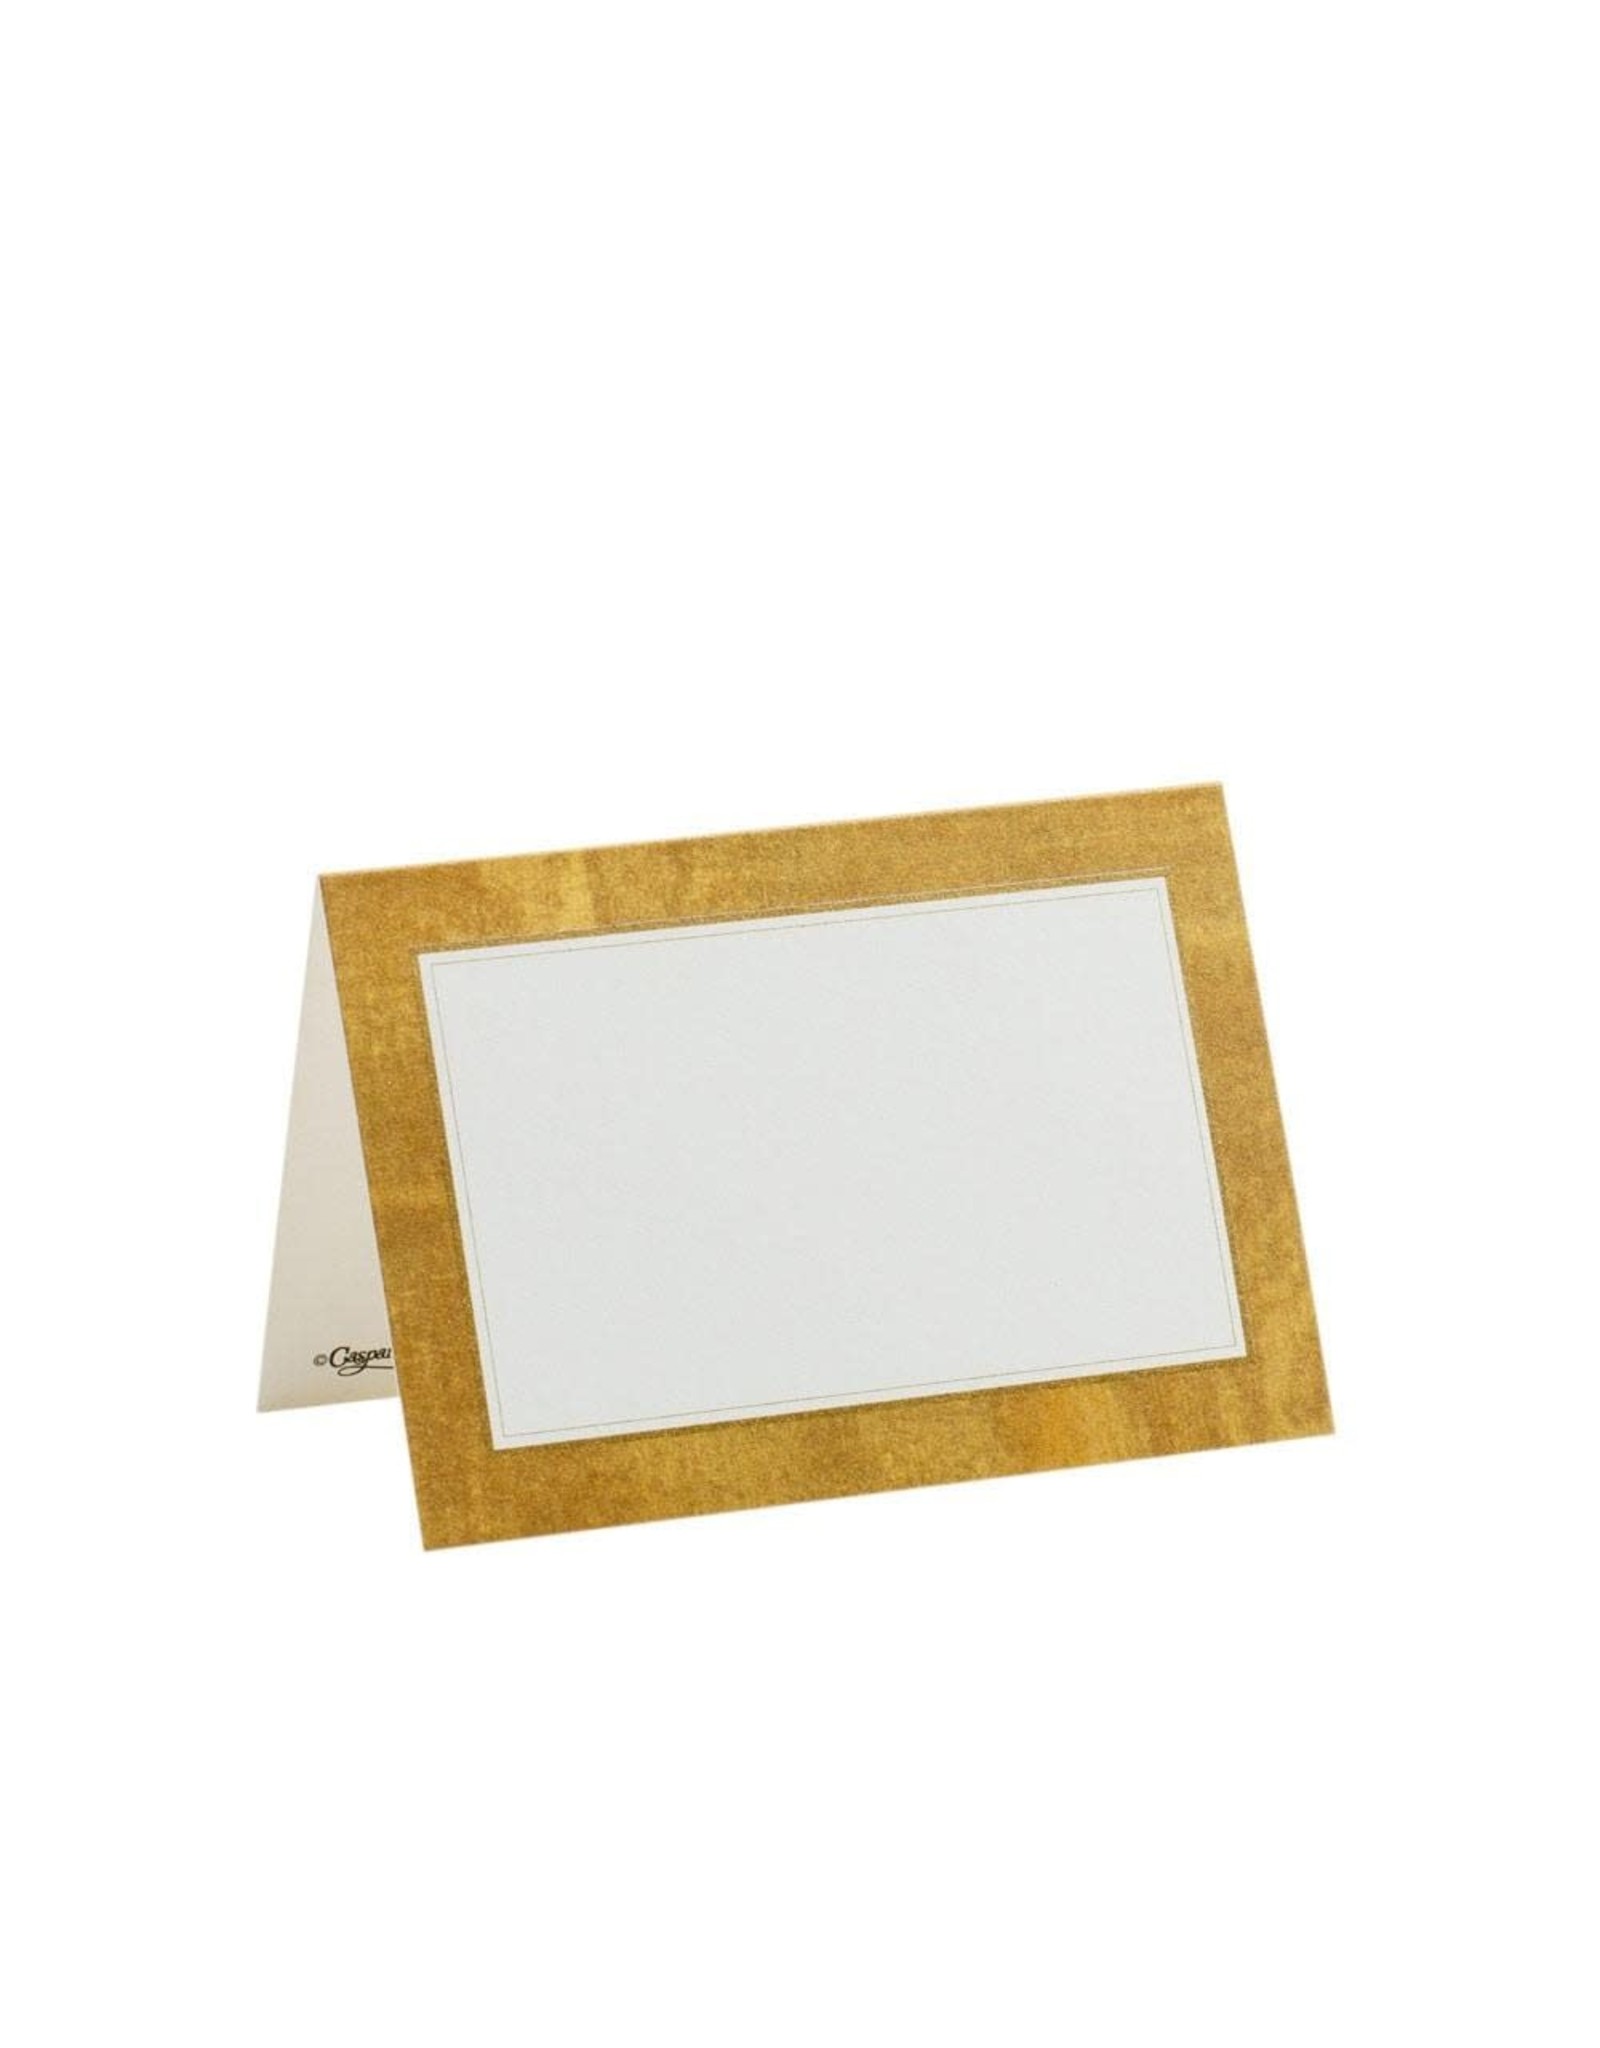 Caspari Table Place Cards 10pk Gold Leaf Border Classic Fold